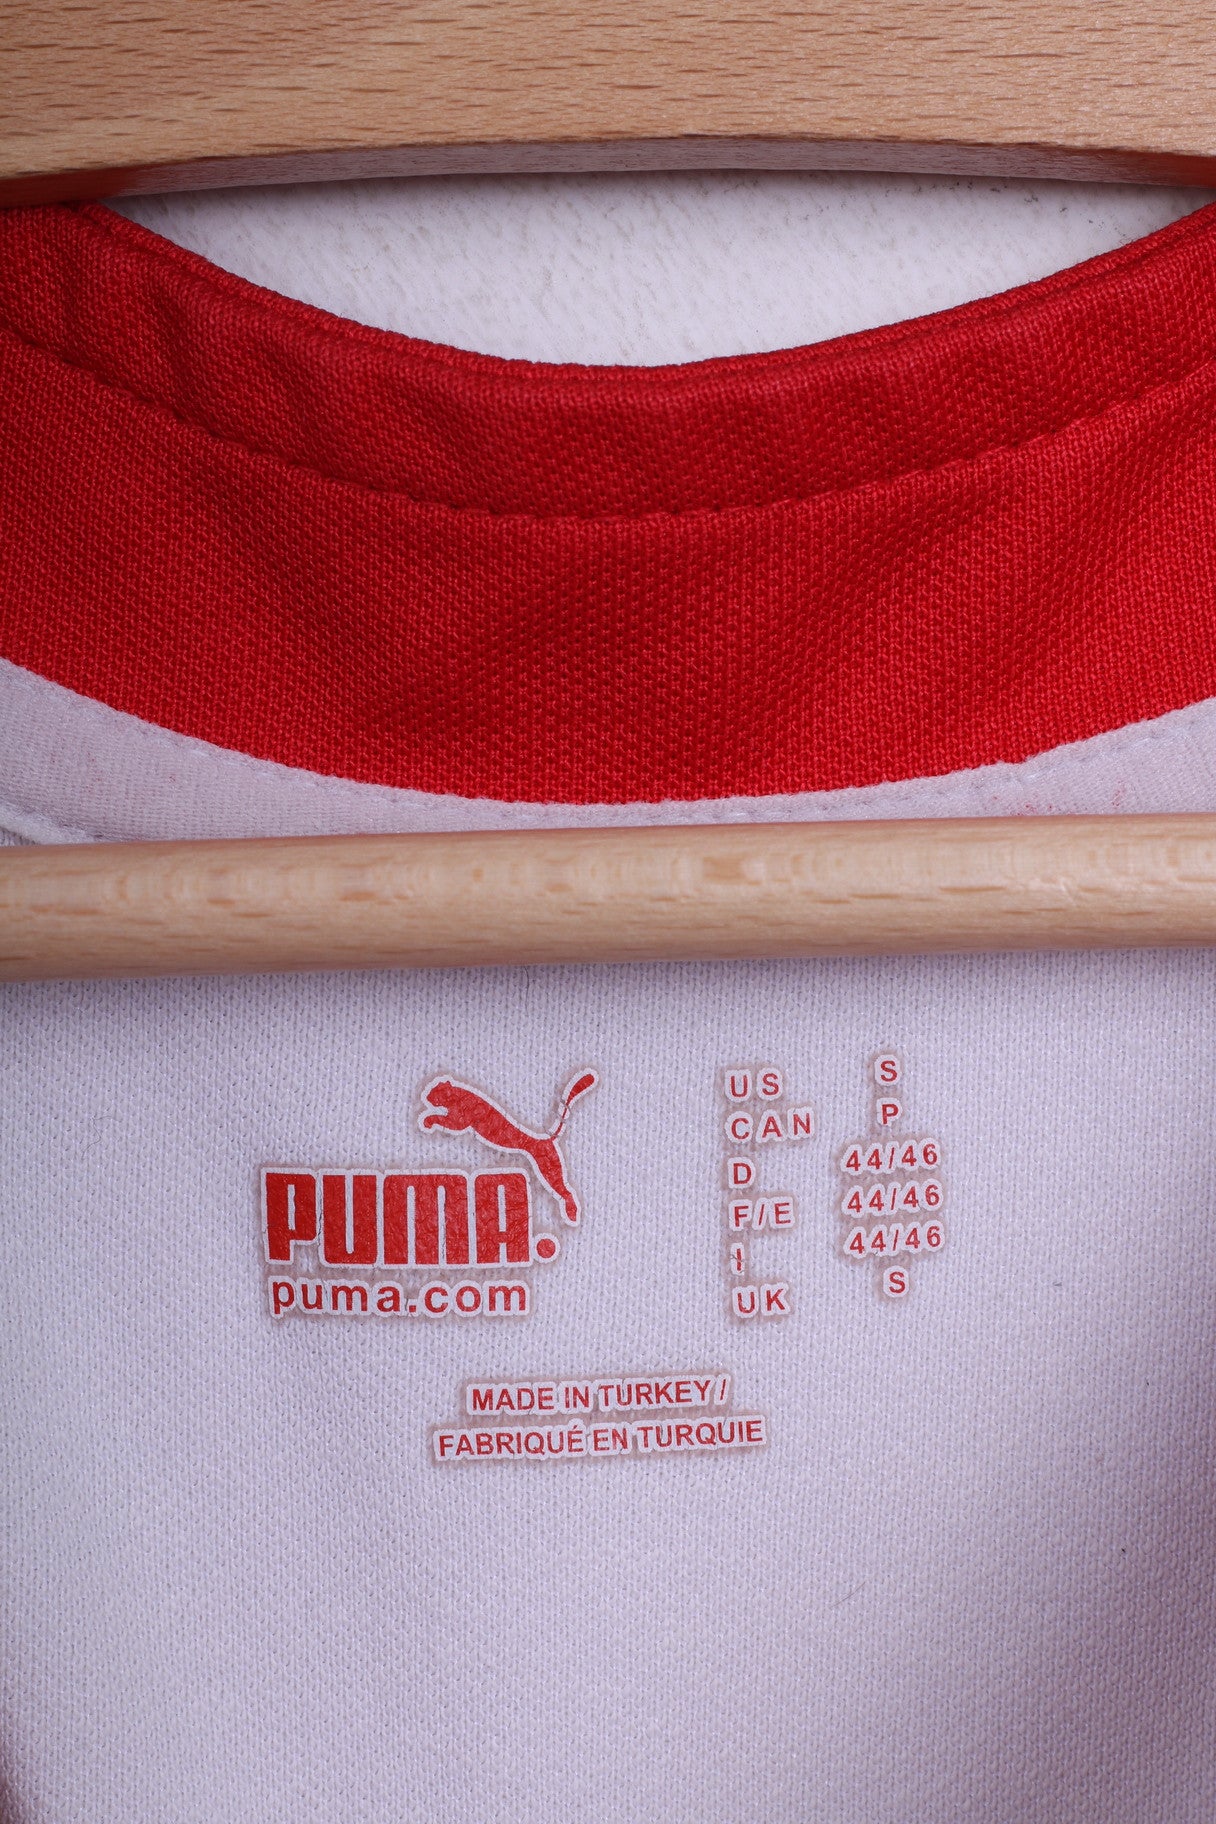 Puma St.Helens Mens S Shirt White Rugby League Club Sport Earth - RetrospectClothes